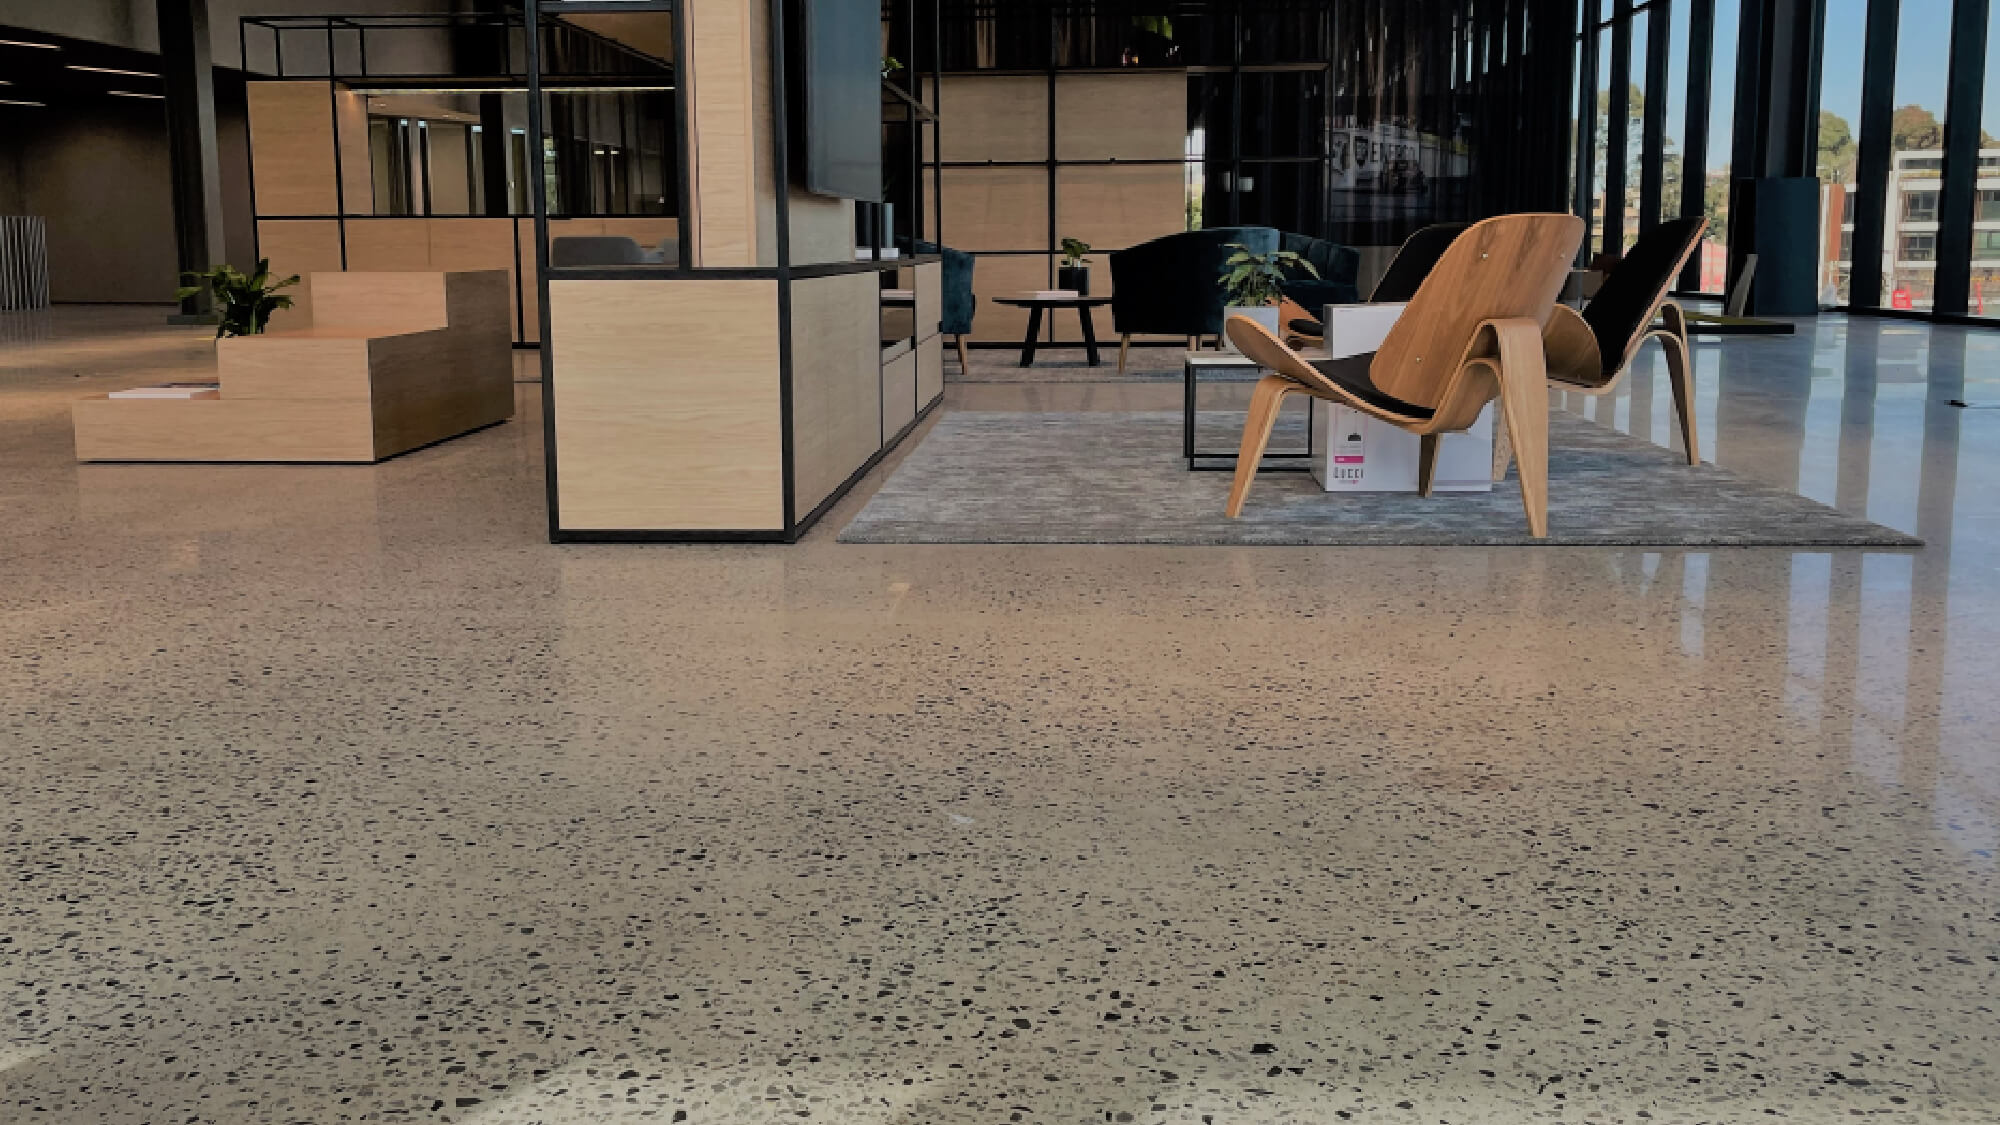 polished concrete floors